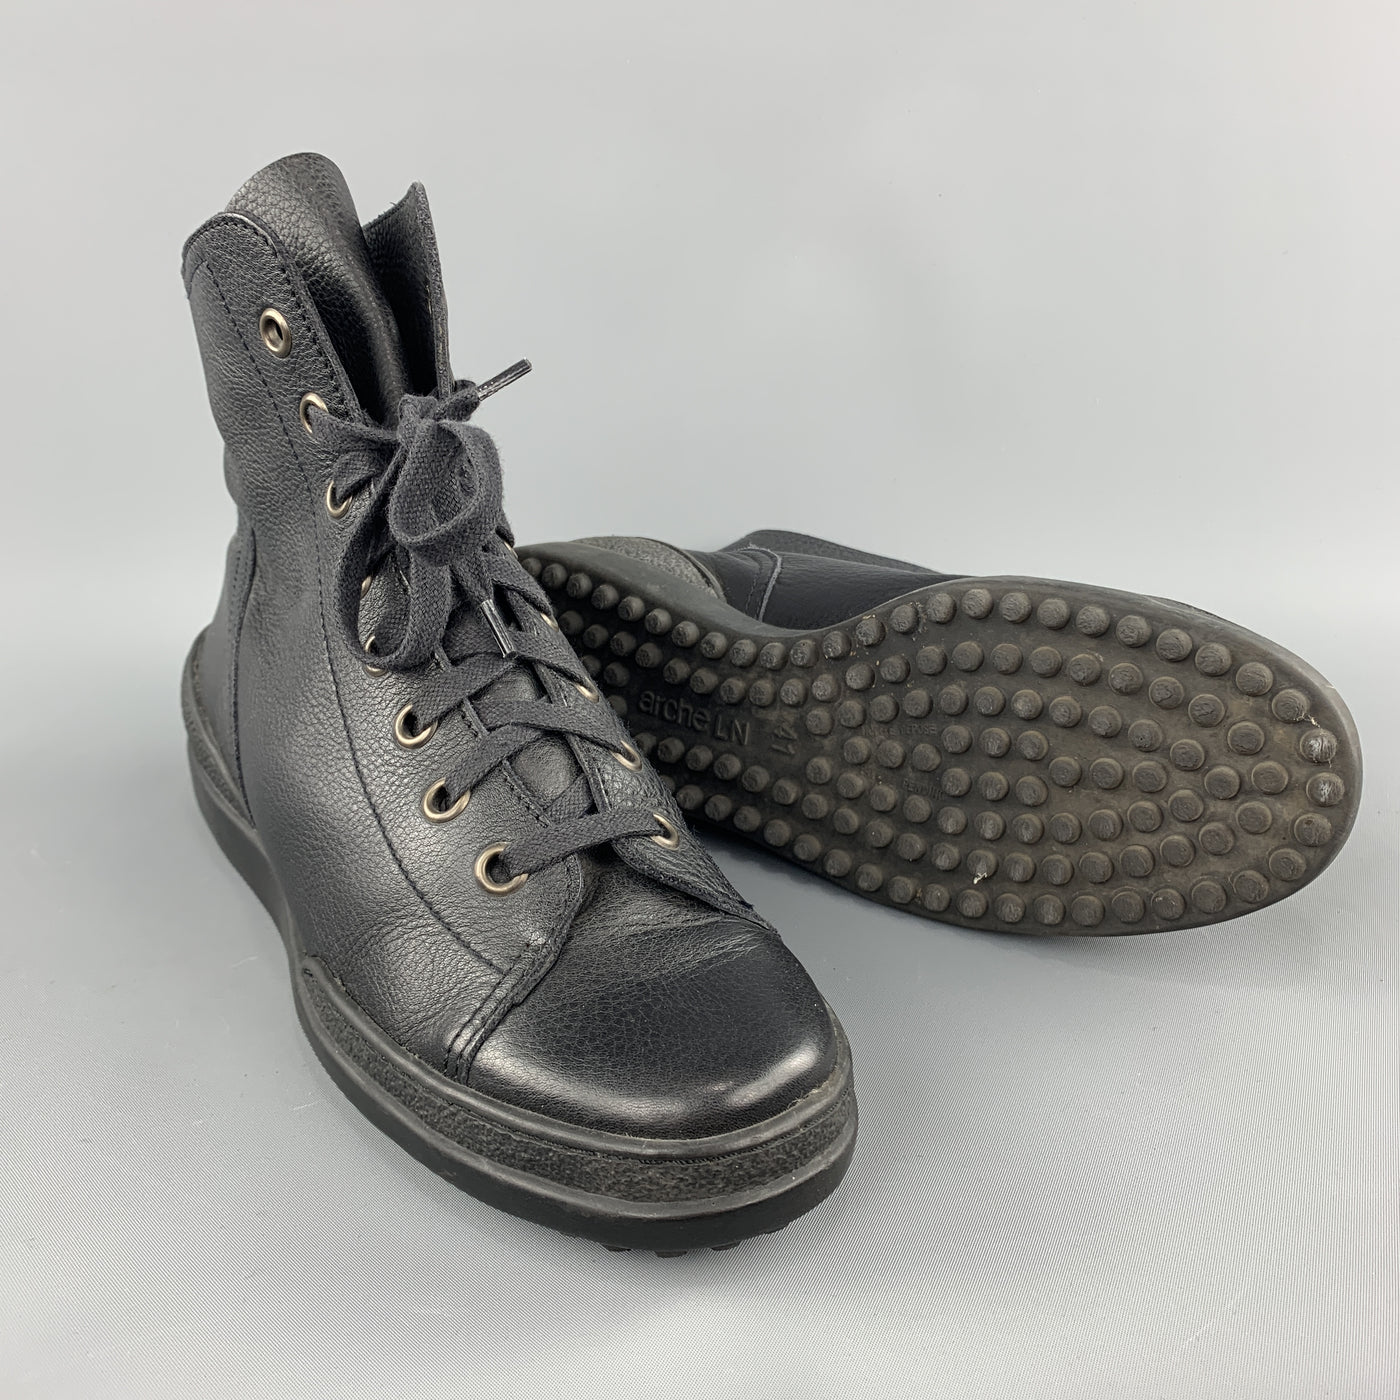 ARCHE Size 8 Black Leather Lace Up Rubber Sole Boots